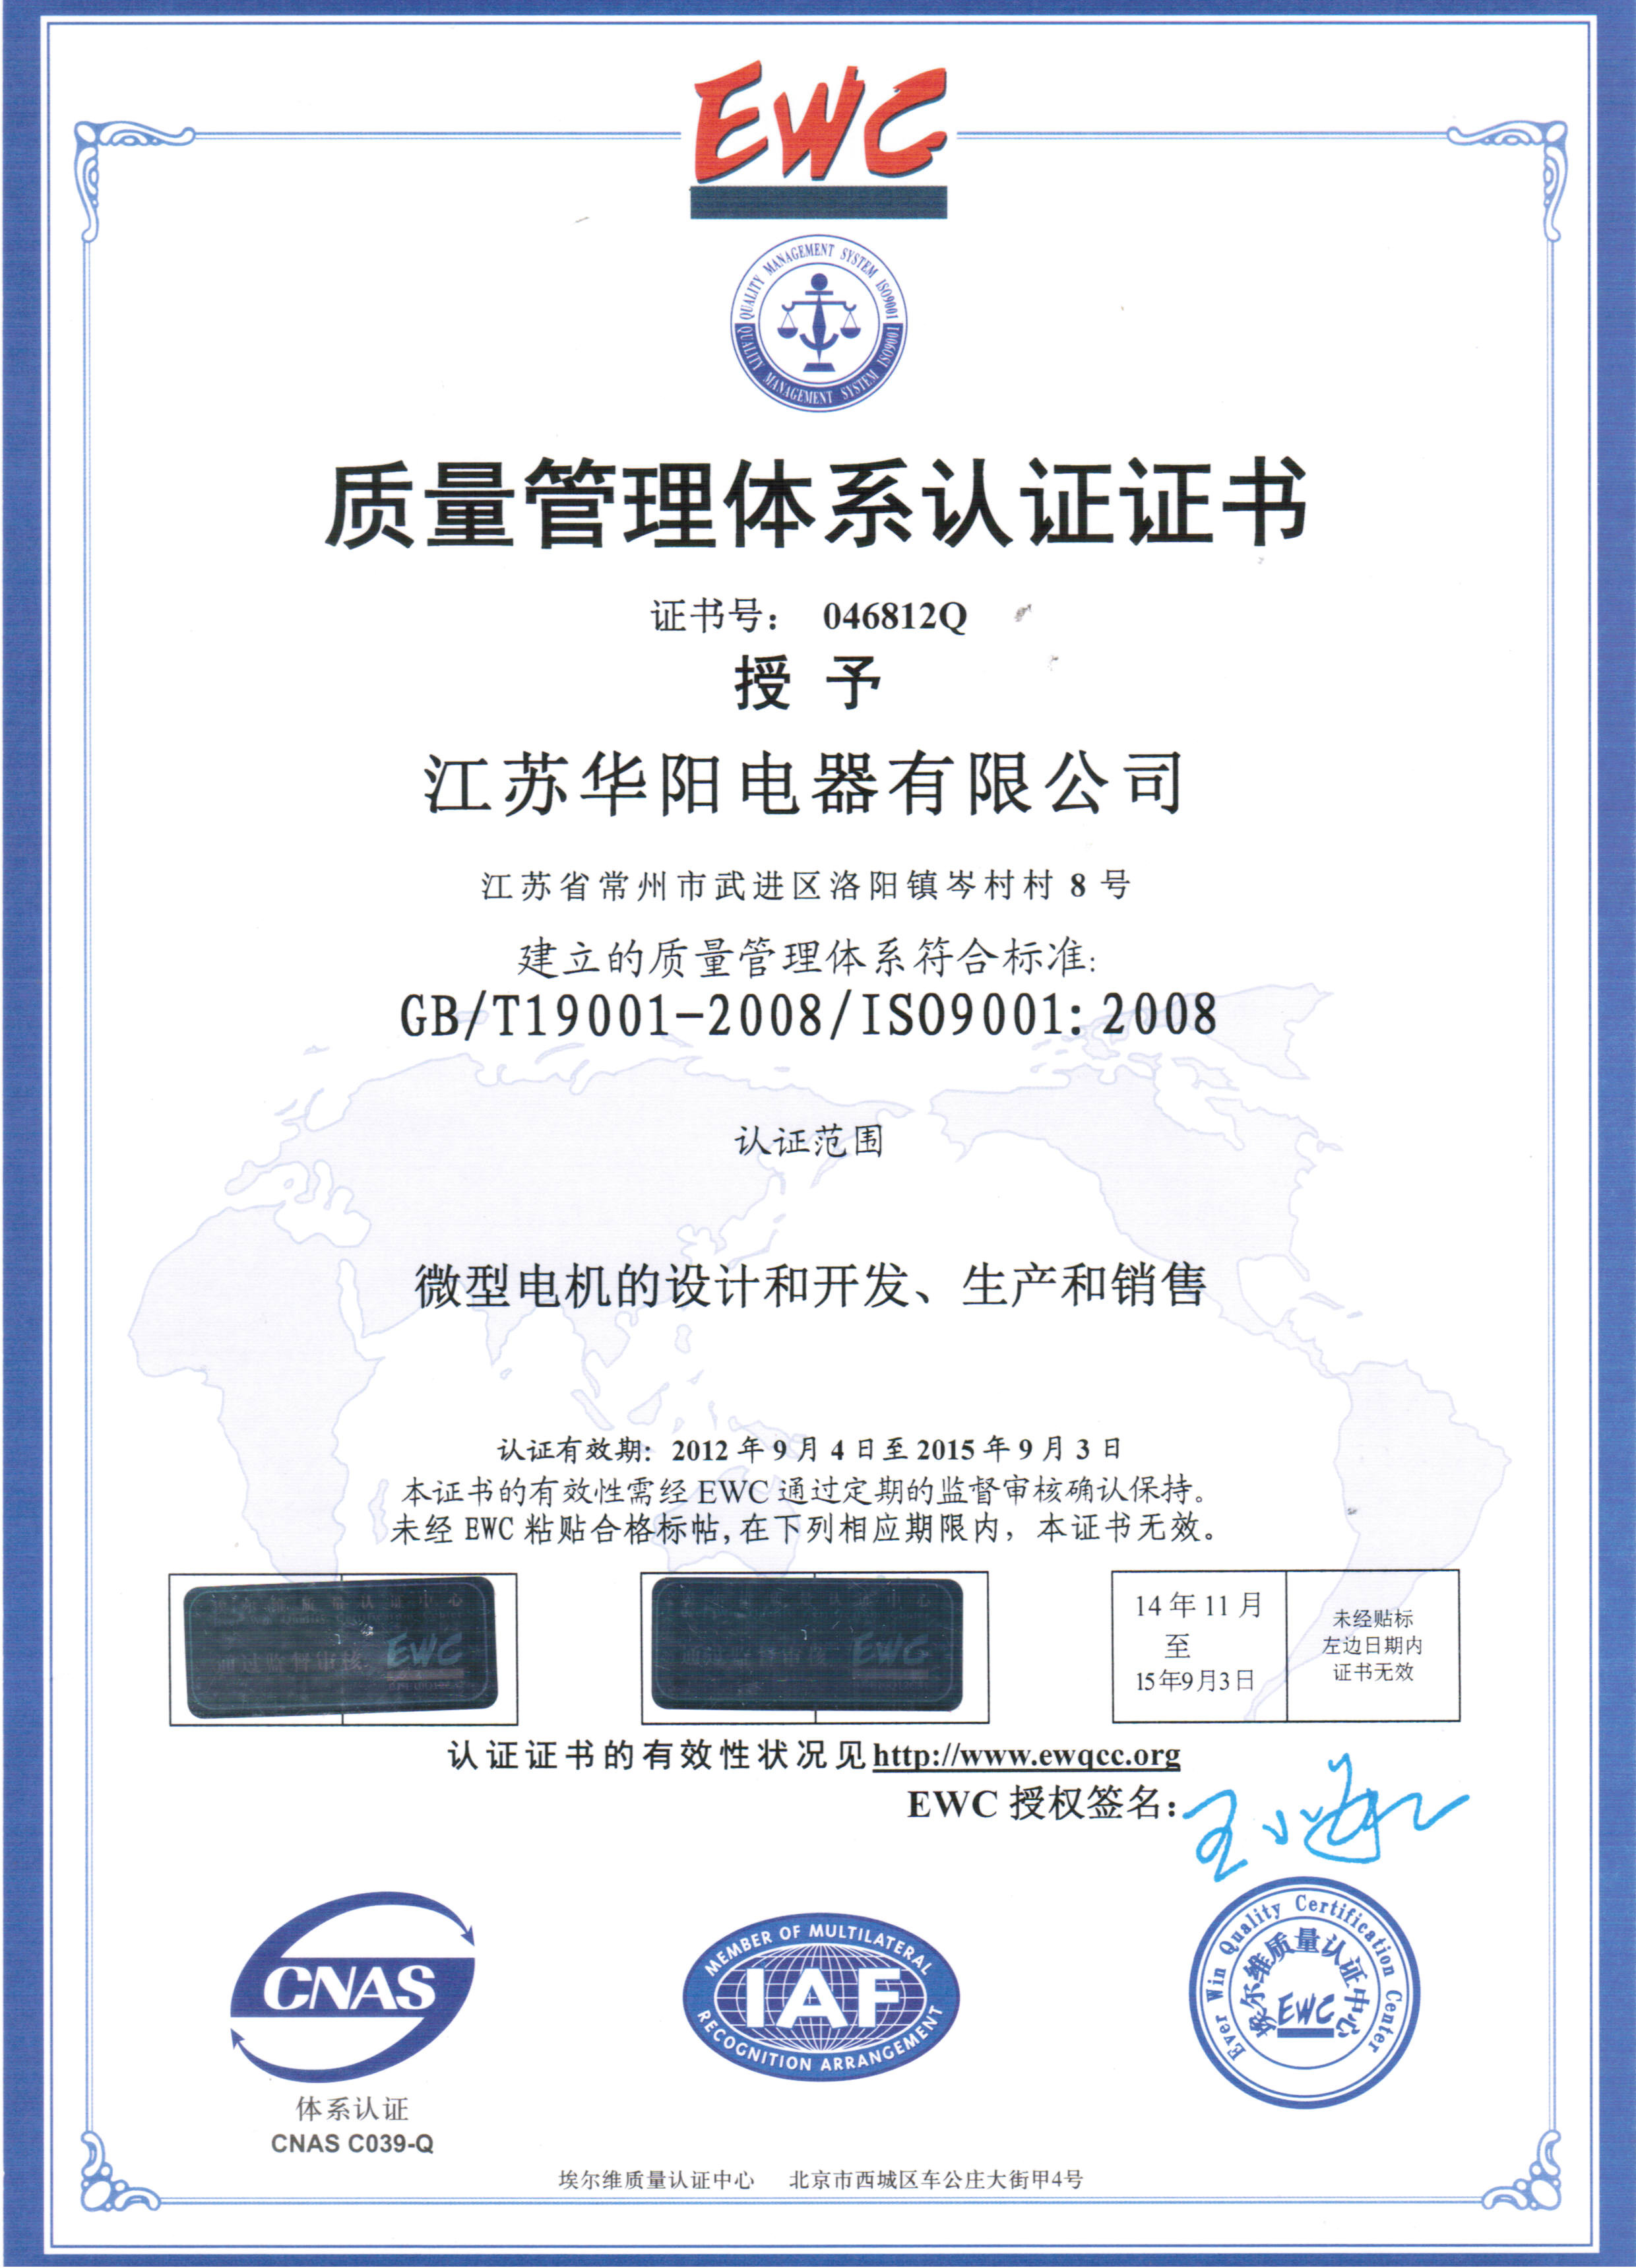 Shenzhen Lohas Medical devices co., Ltd. сертификат. Huawei device co Ltd Dongguan 523808 часы. Shaanxi Baoguang Vacuum Electric device co., Ltd каталог. Huawei device co Ltd Dongguan 523808 ноутбук. Device co ltd